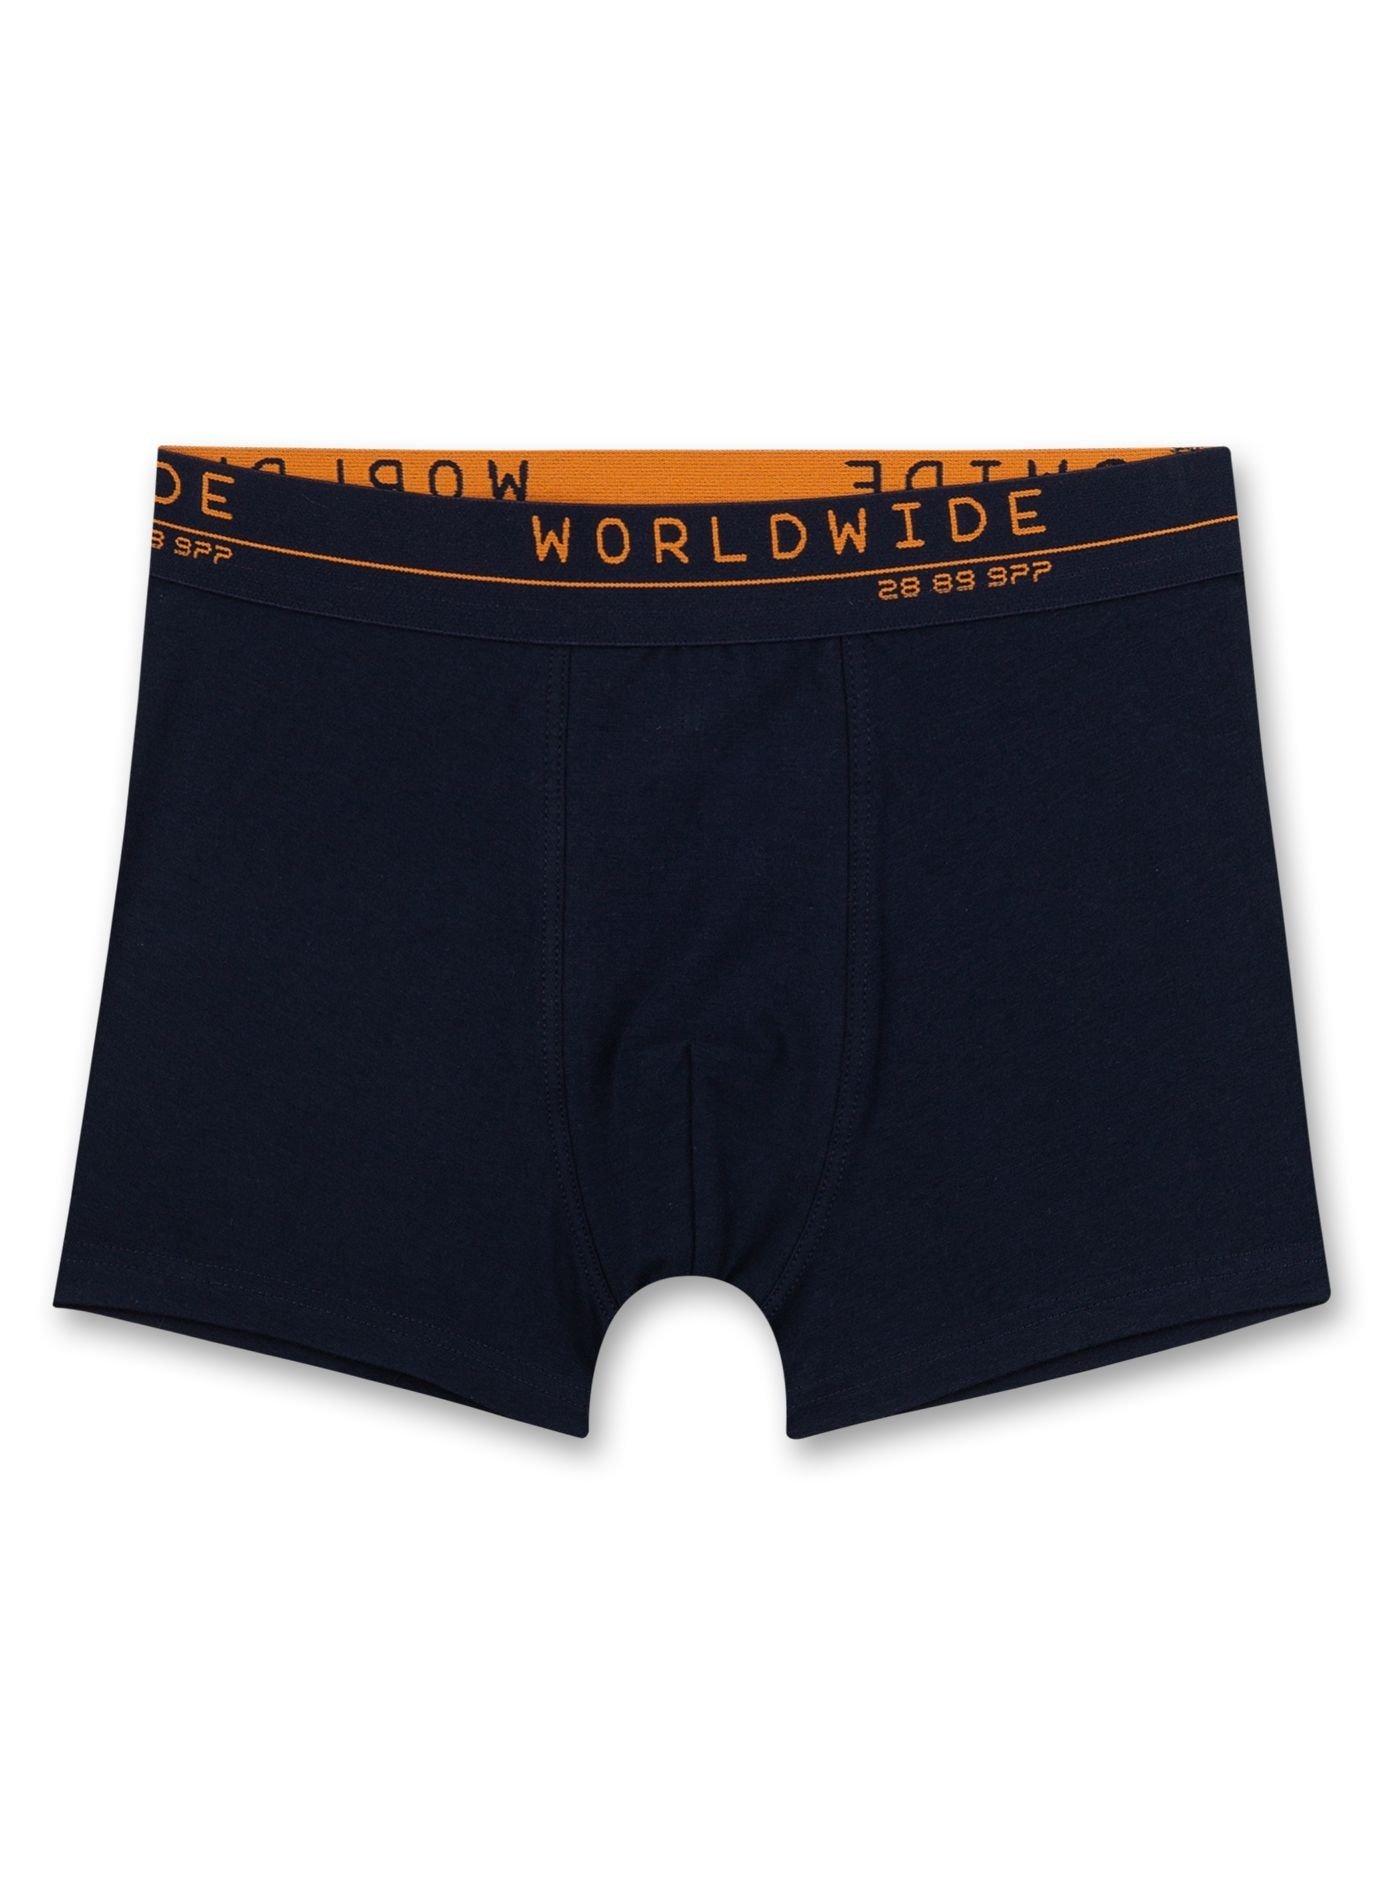 Sanetta  Jungen-Shorts (Doppelpack) Worldwide 